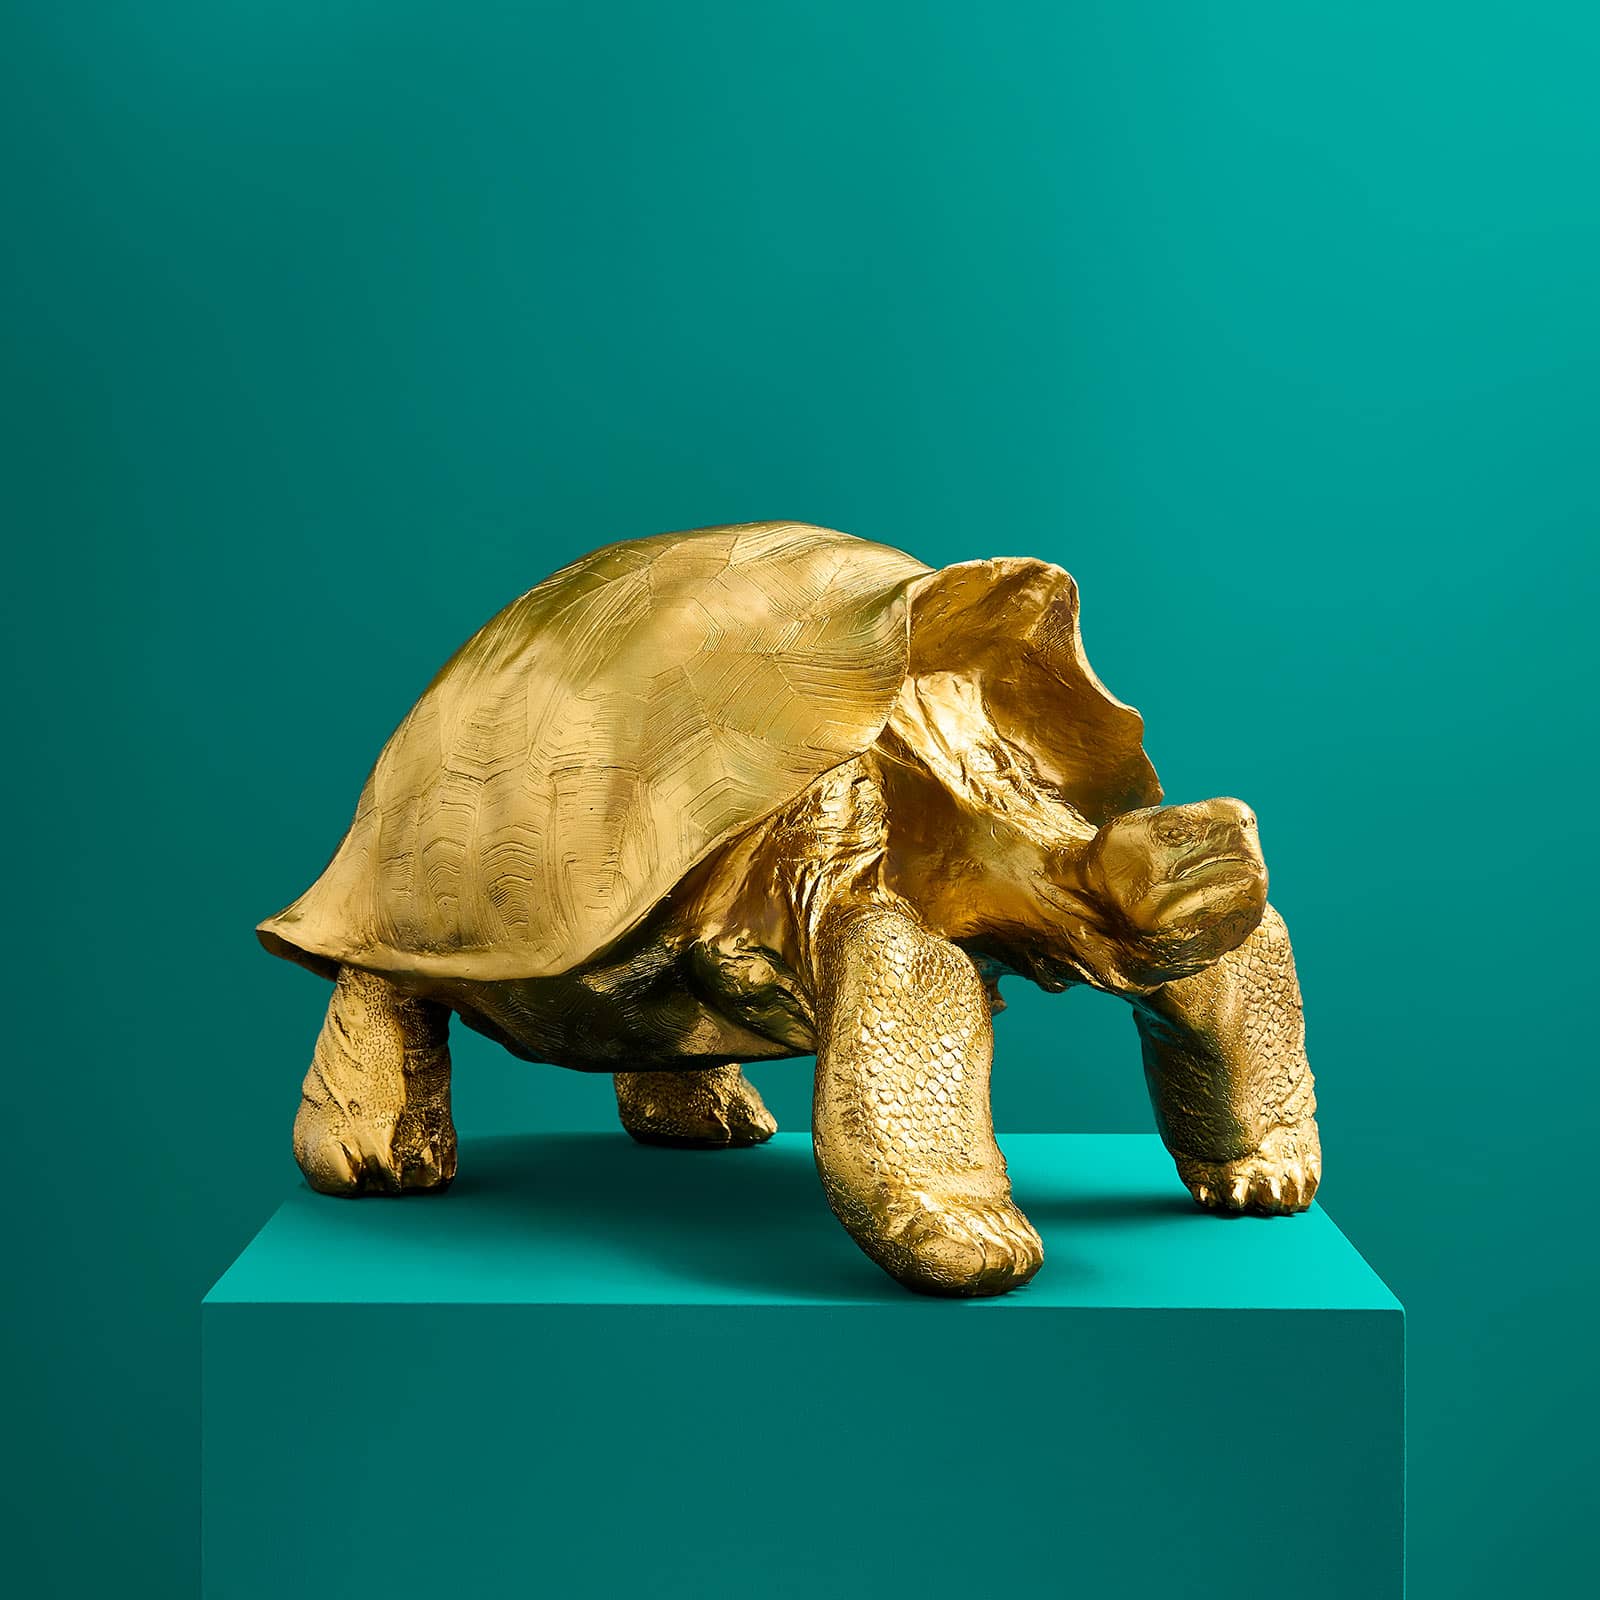 Objet déco / figurine déco tortue Stormy, or, polyrésine, 56x36x33 cm